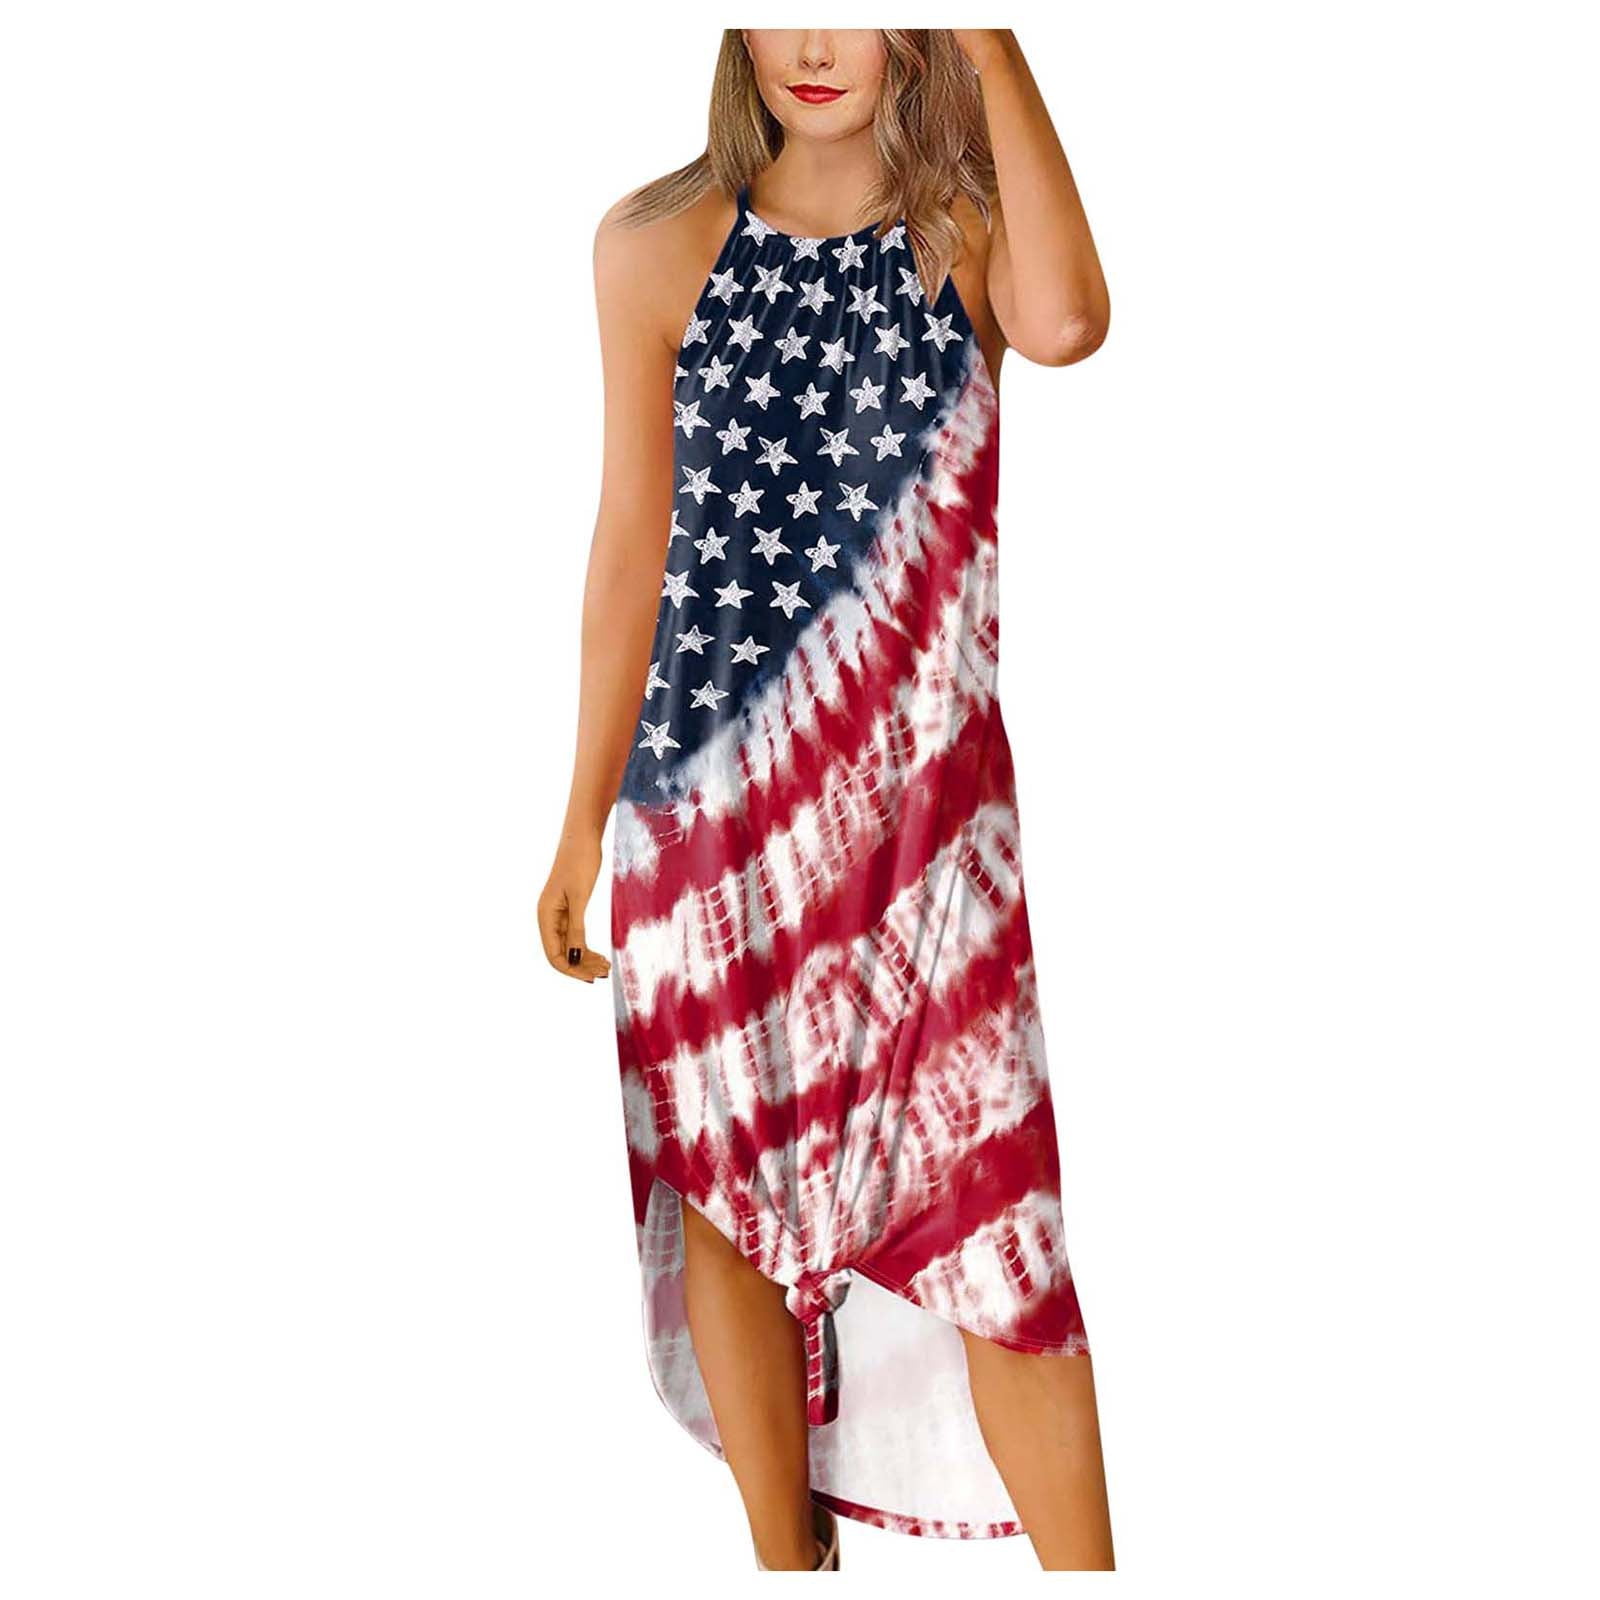 IFOTIME American Flag Dress for Women Summer Beach Sleeveless Sundress Swing Loose Casual Dress Shirt with Pocket